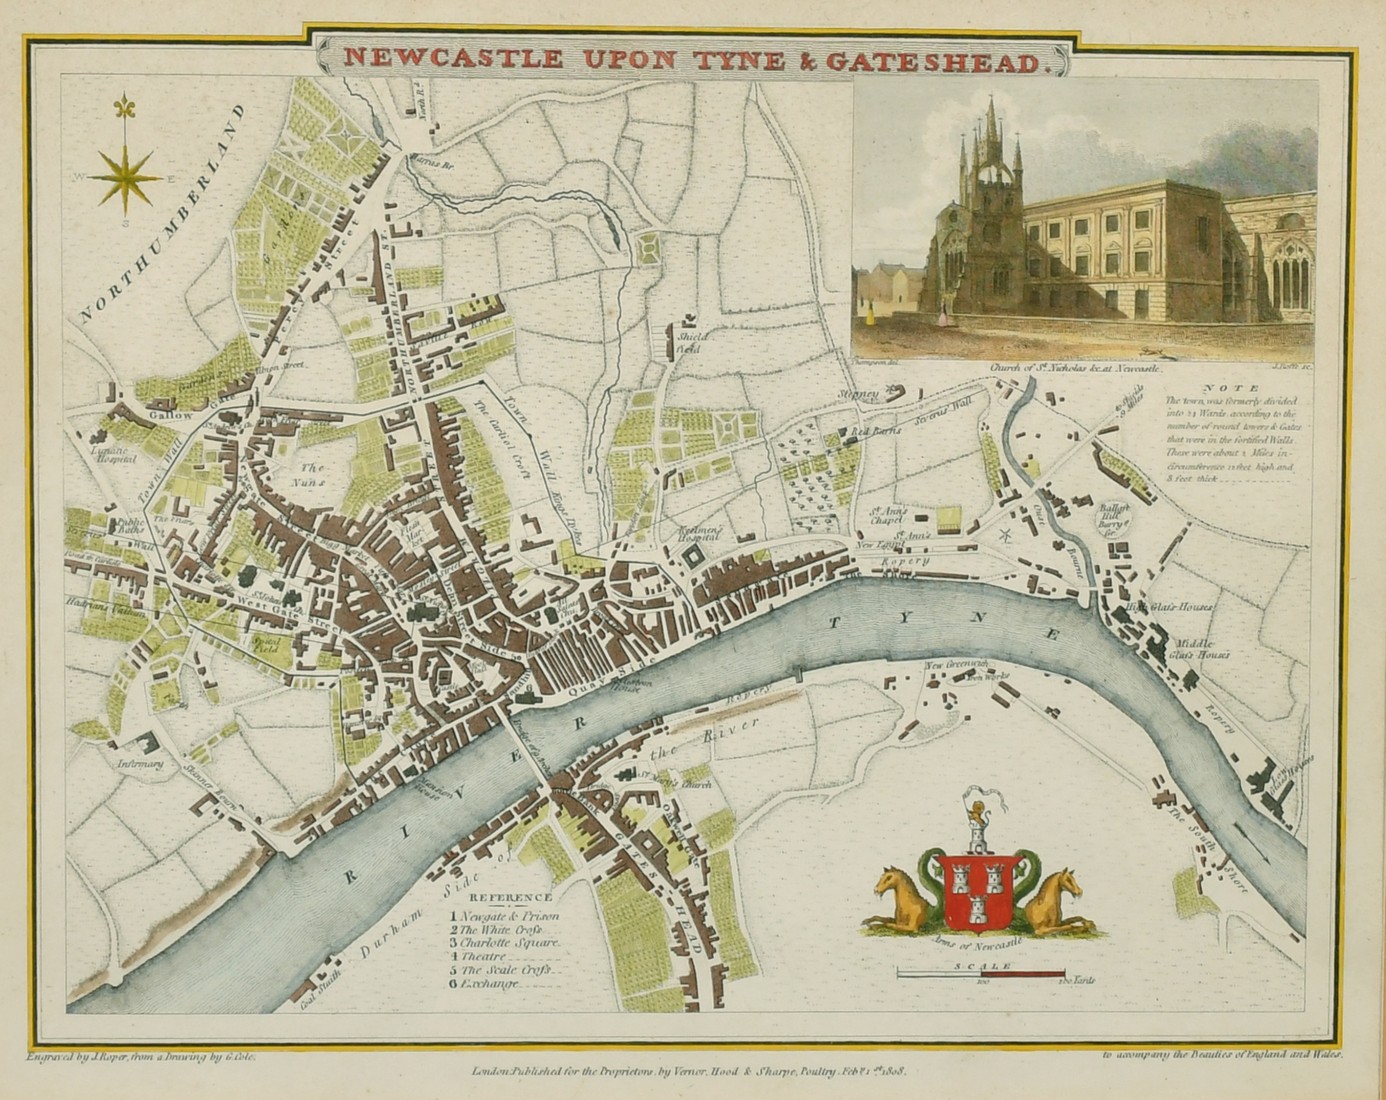 Newcastle Upon Tyne & Gateshead, by G. Cole & J. Roper circa 1810, hand coloured engraving, 7.75"